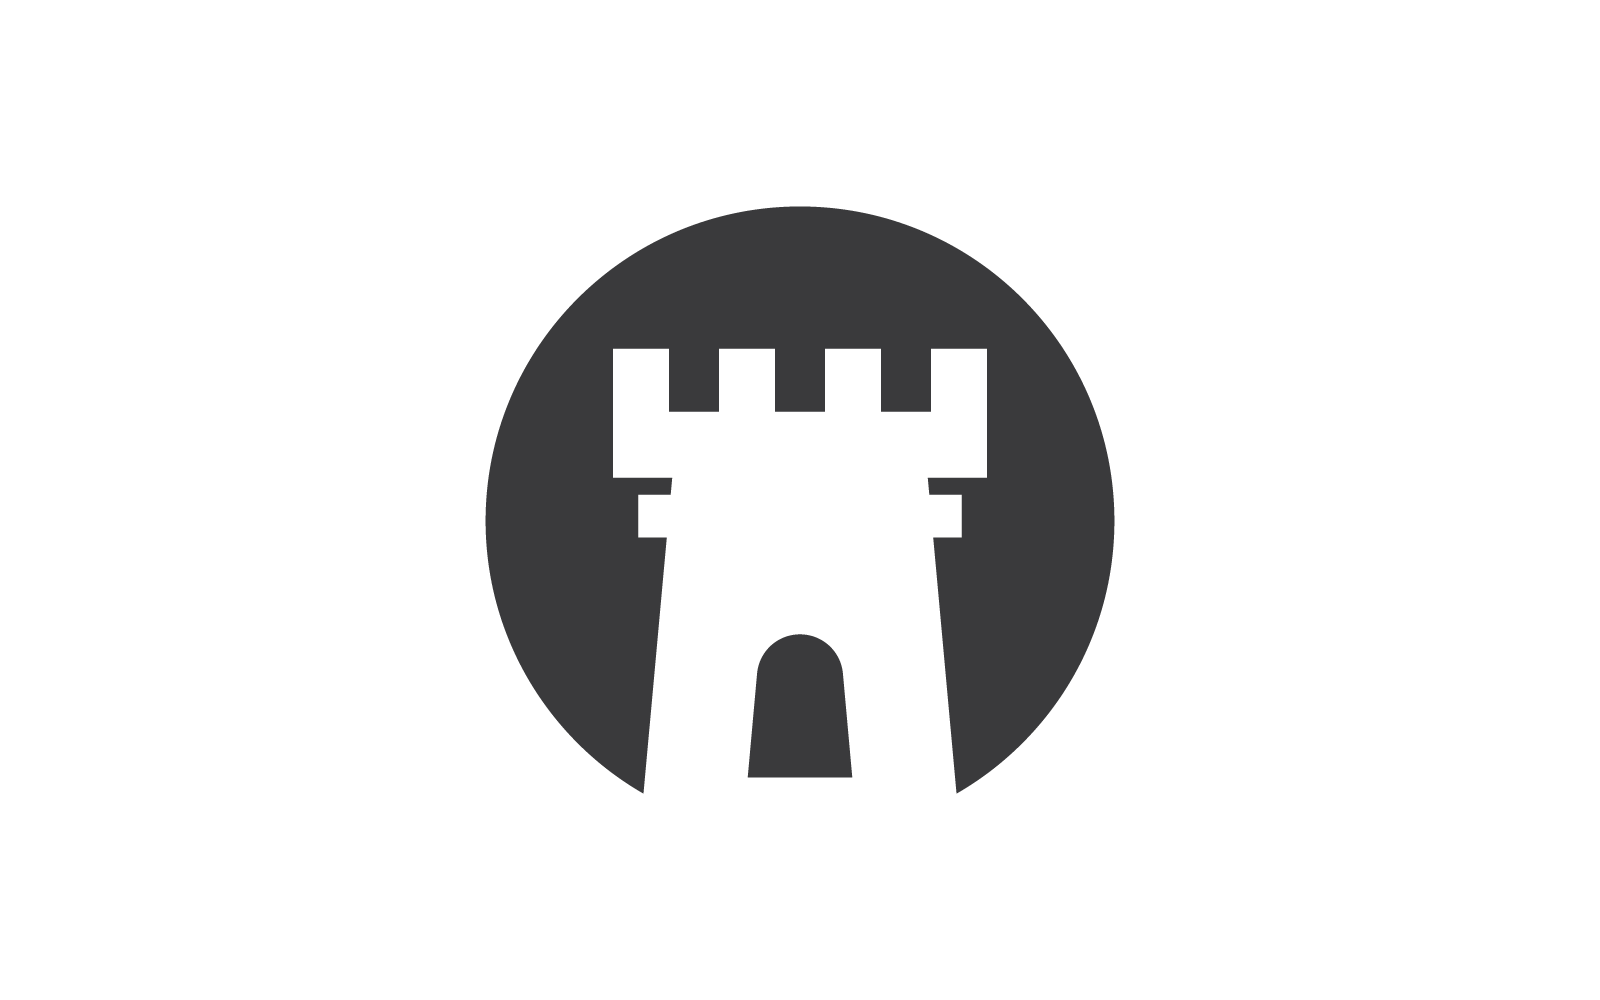 Castle illustration logo design vector template